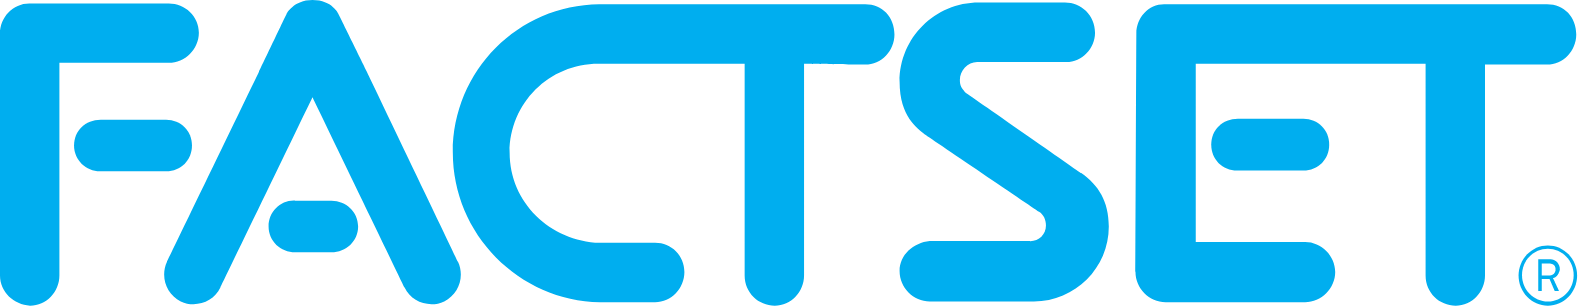 FactSet logo large (transparent PNG)